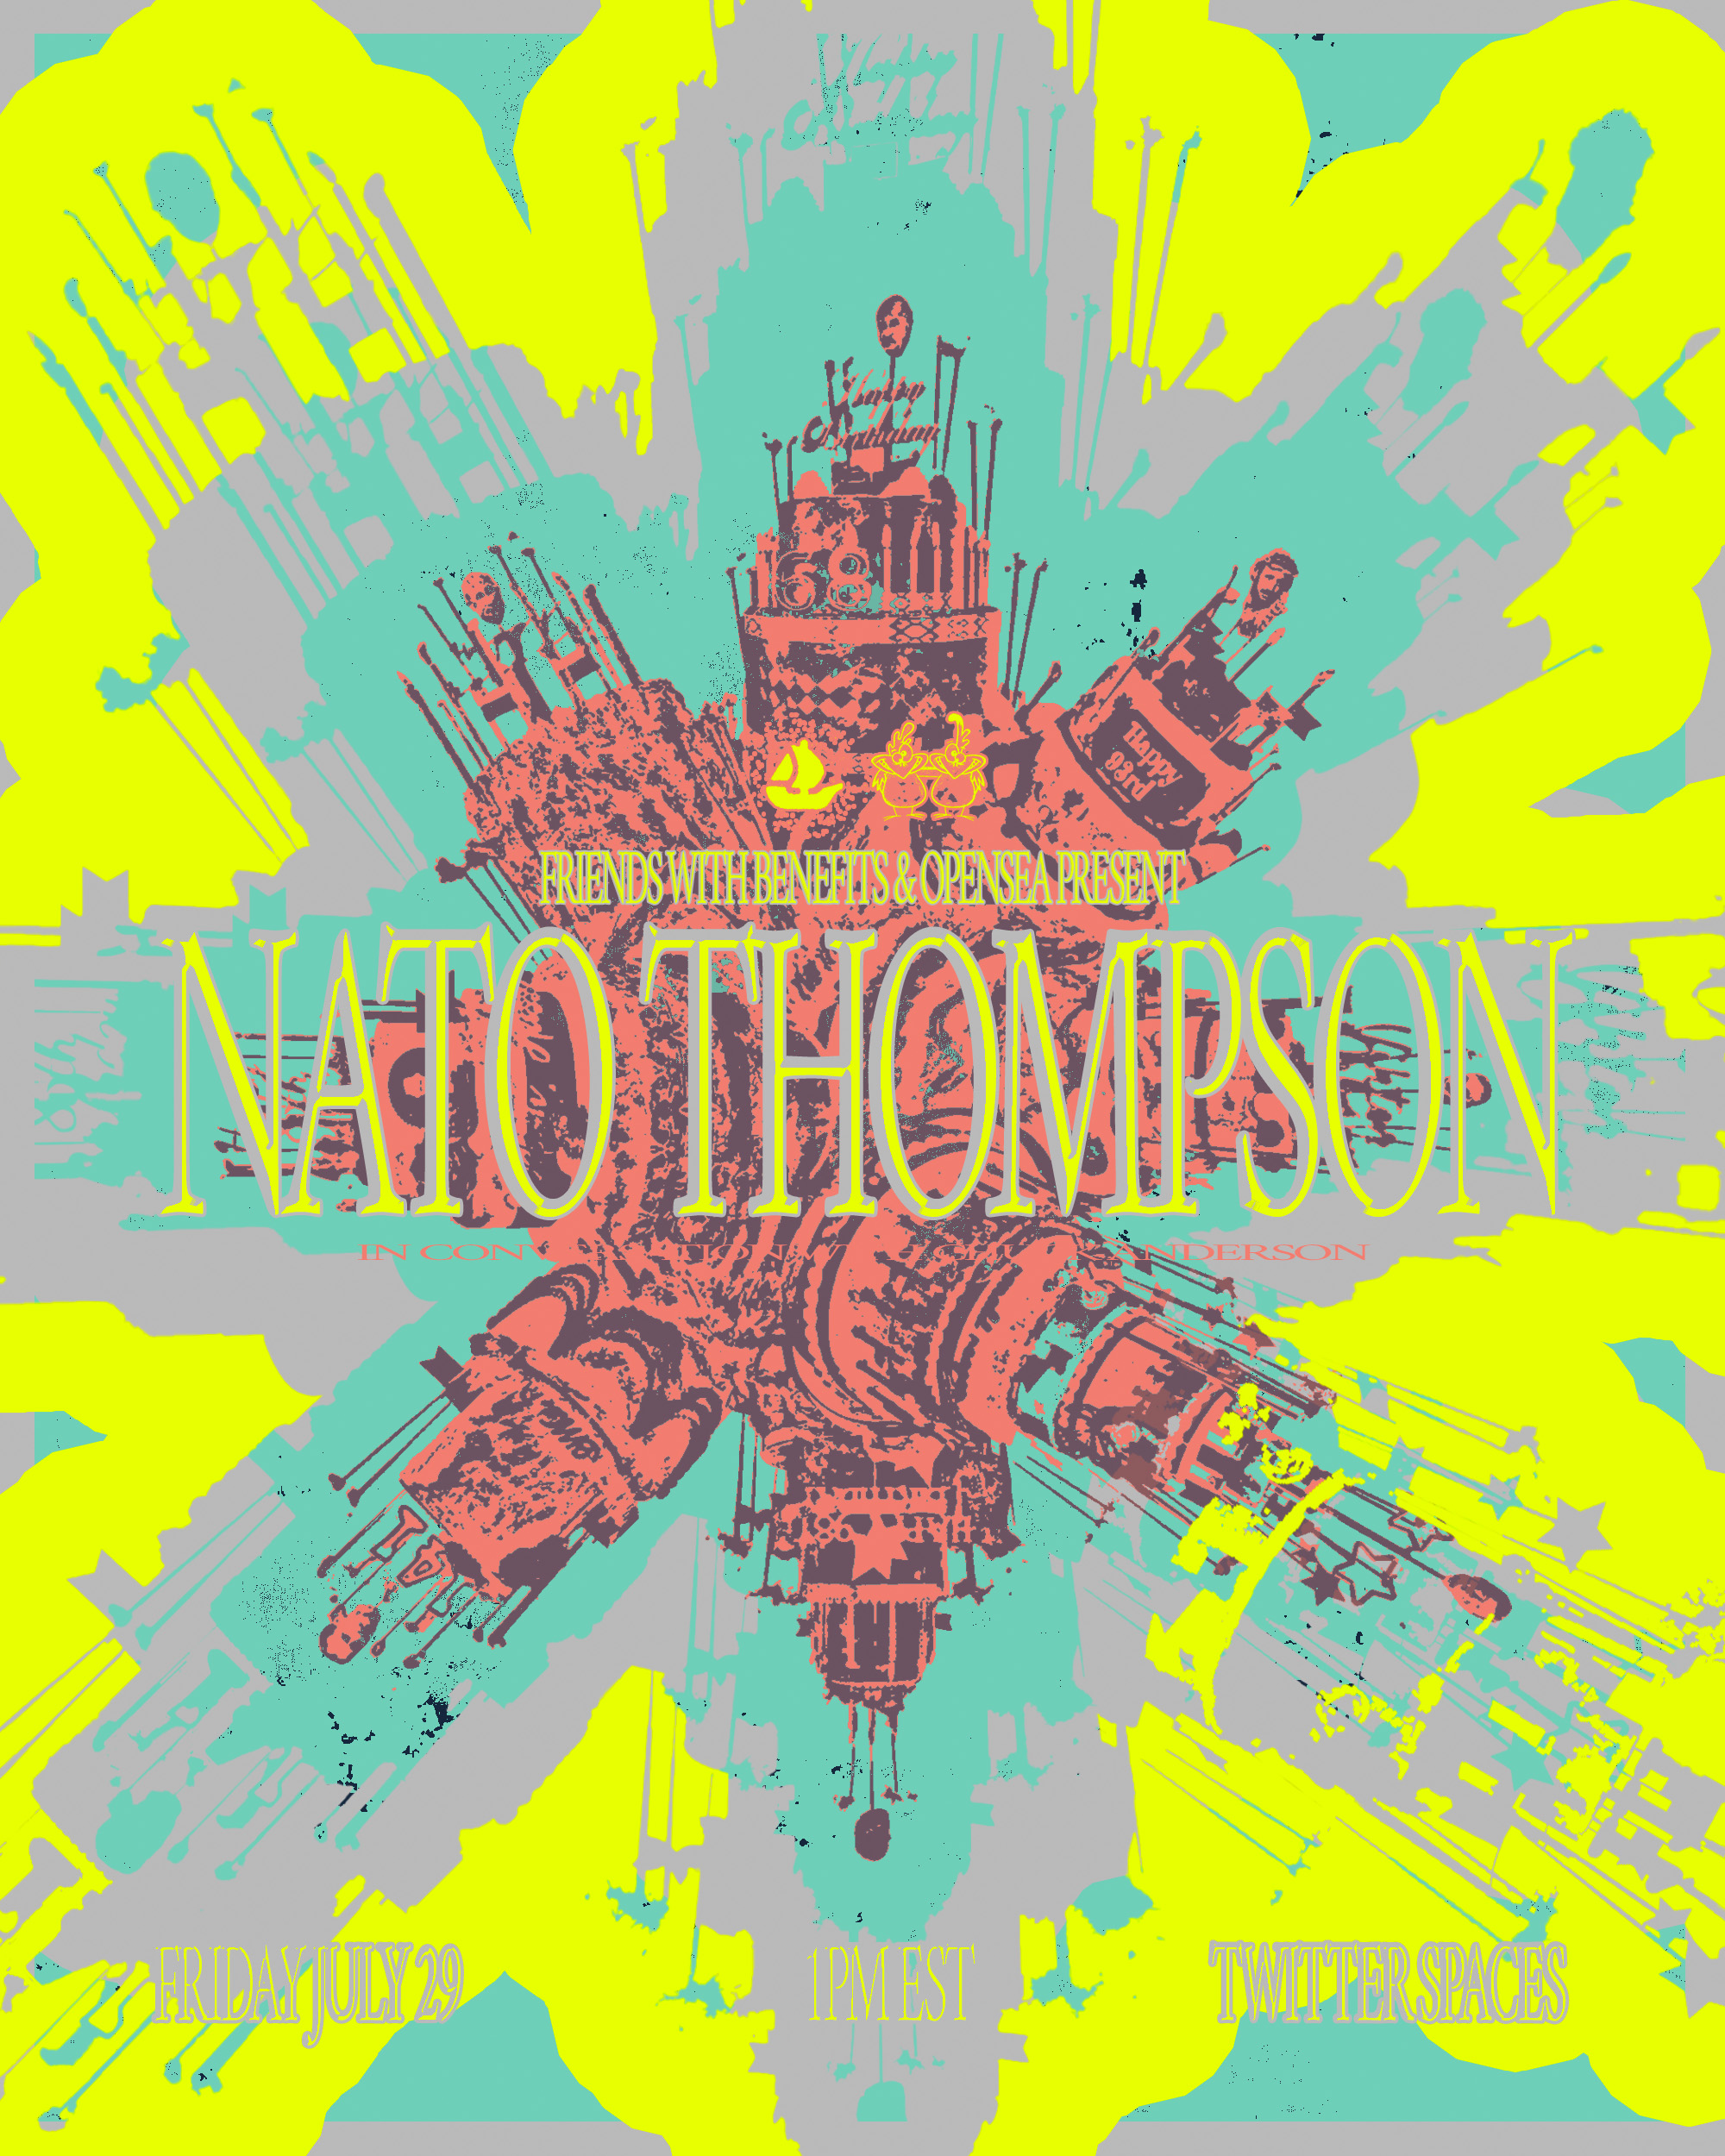 Pirate Radio - Nato Thompson